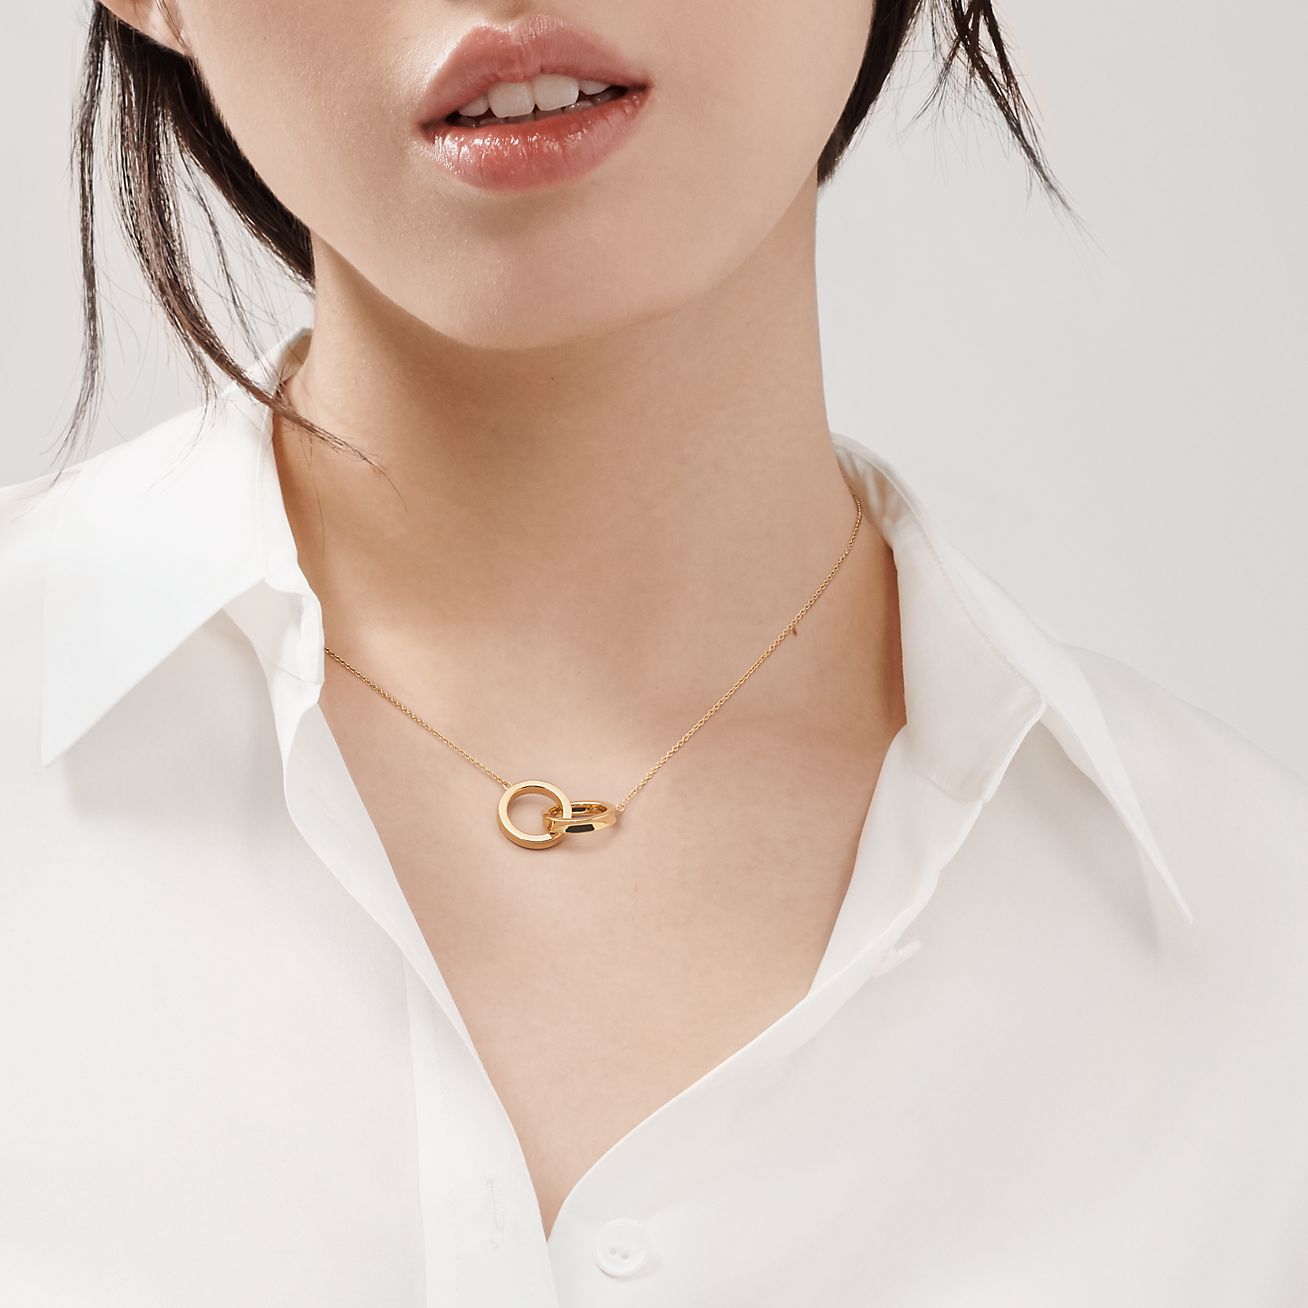 Tiffany & Co. Gold Locket Necklace - FD Gallery